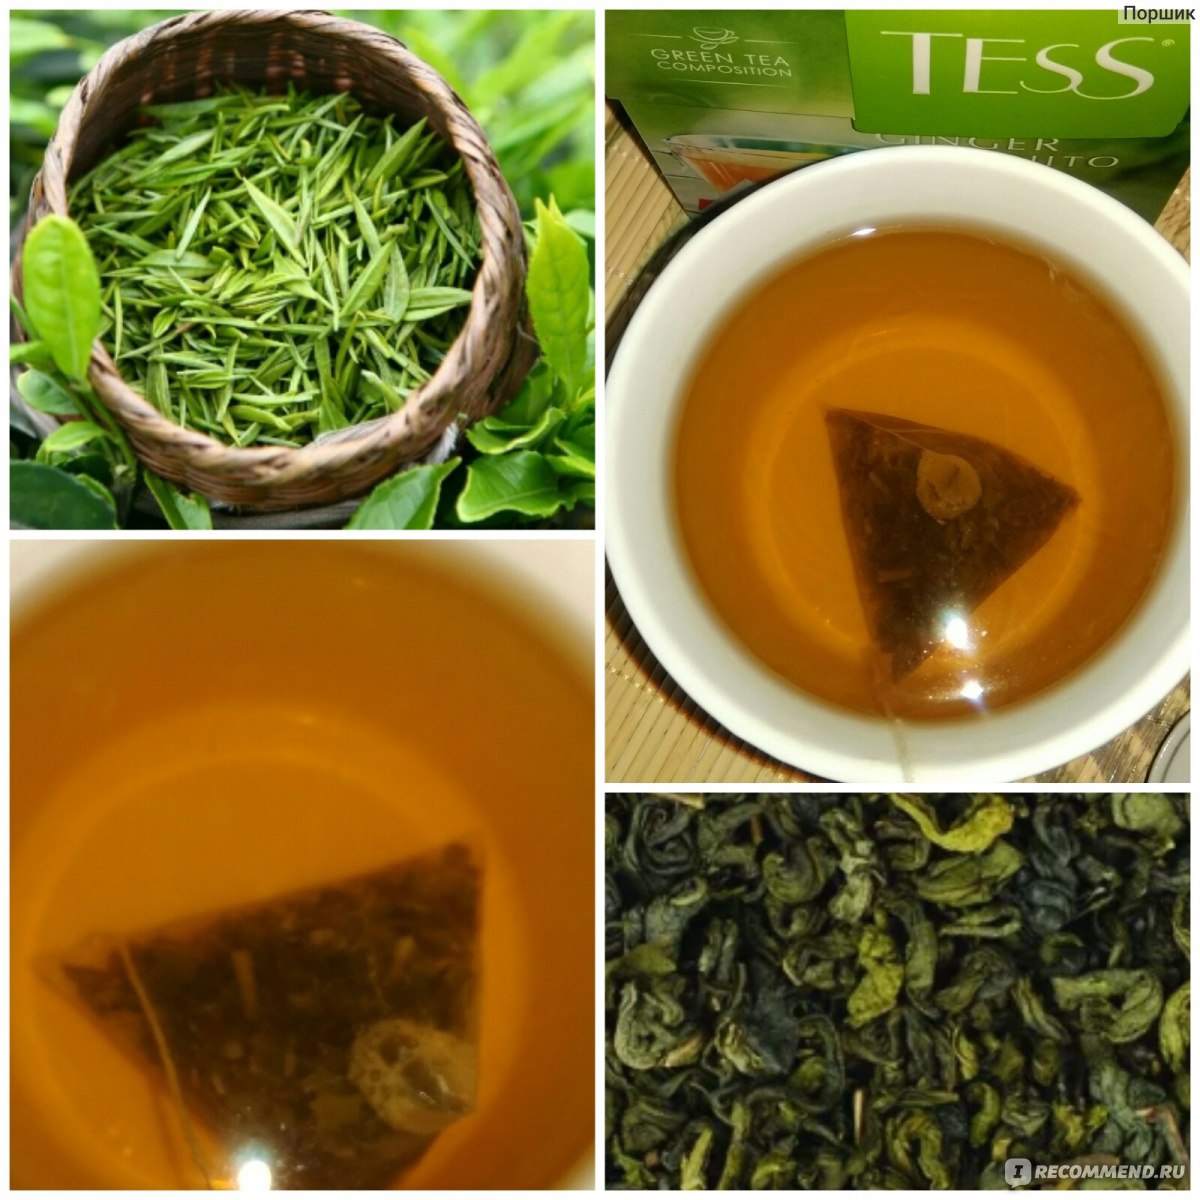 Тесс зеленый чай улун